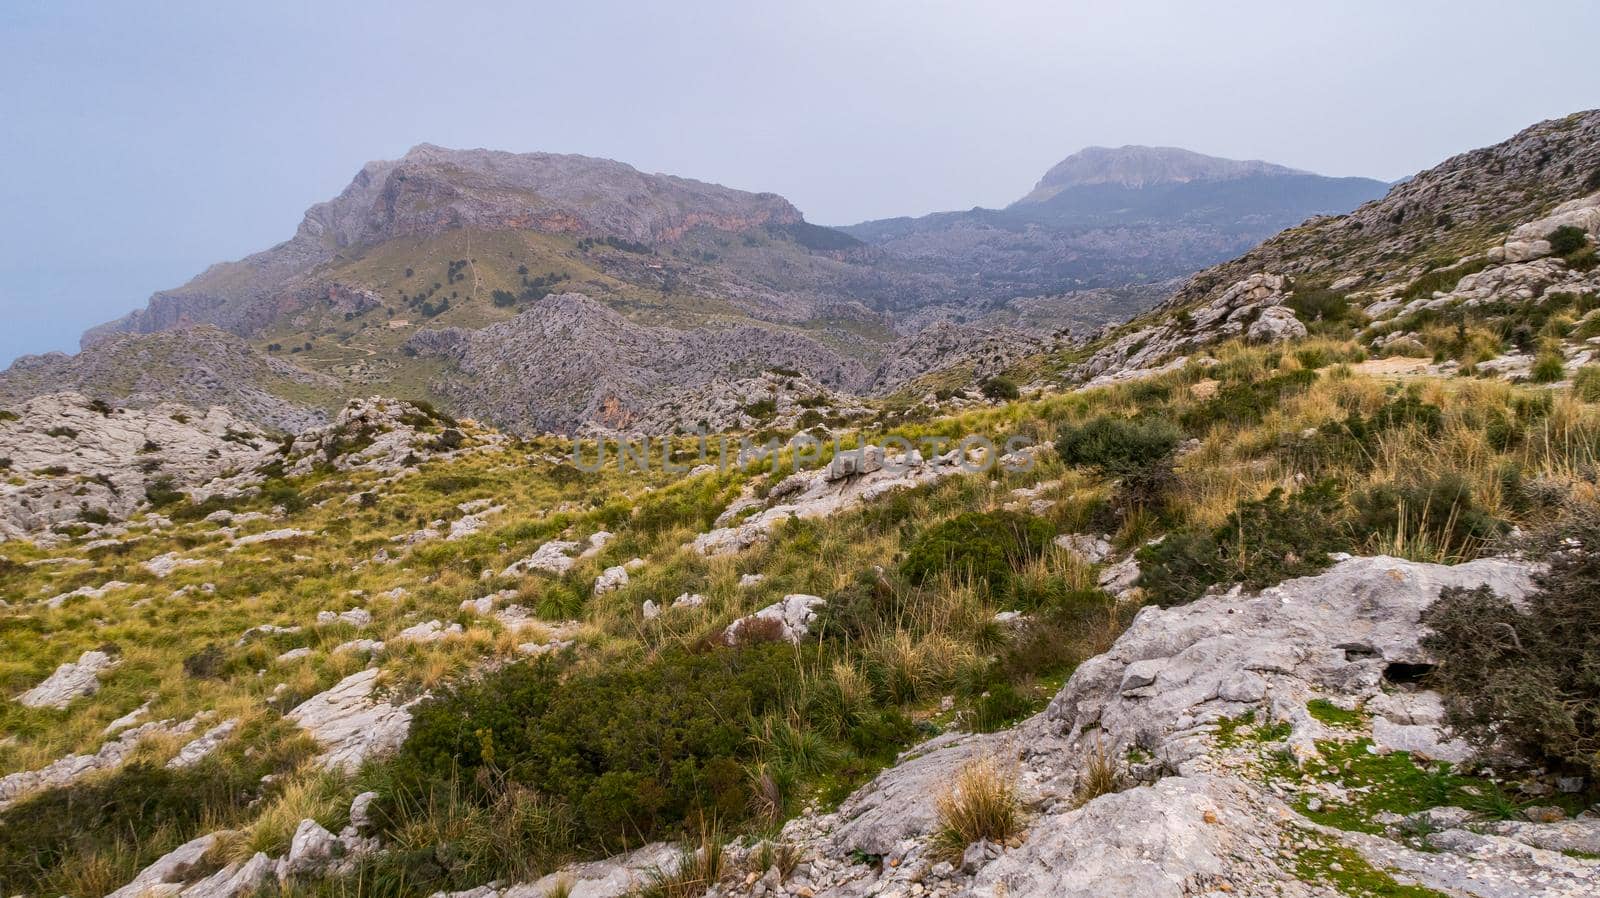 Serra de Tramuntana landscape, Mallorca by bildgigant